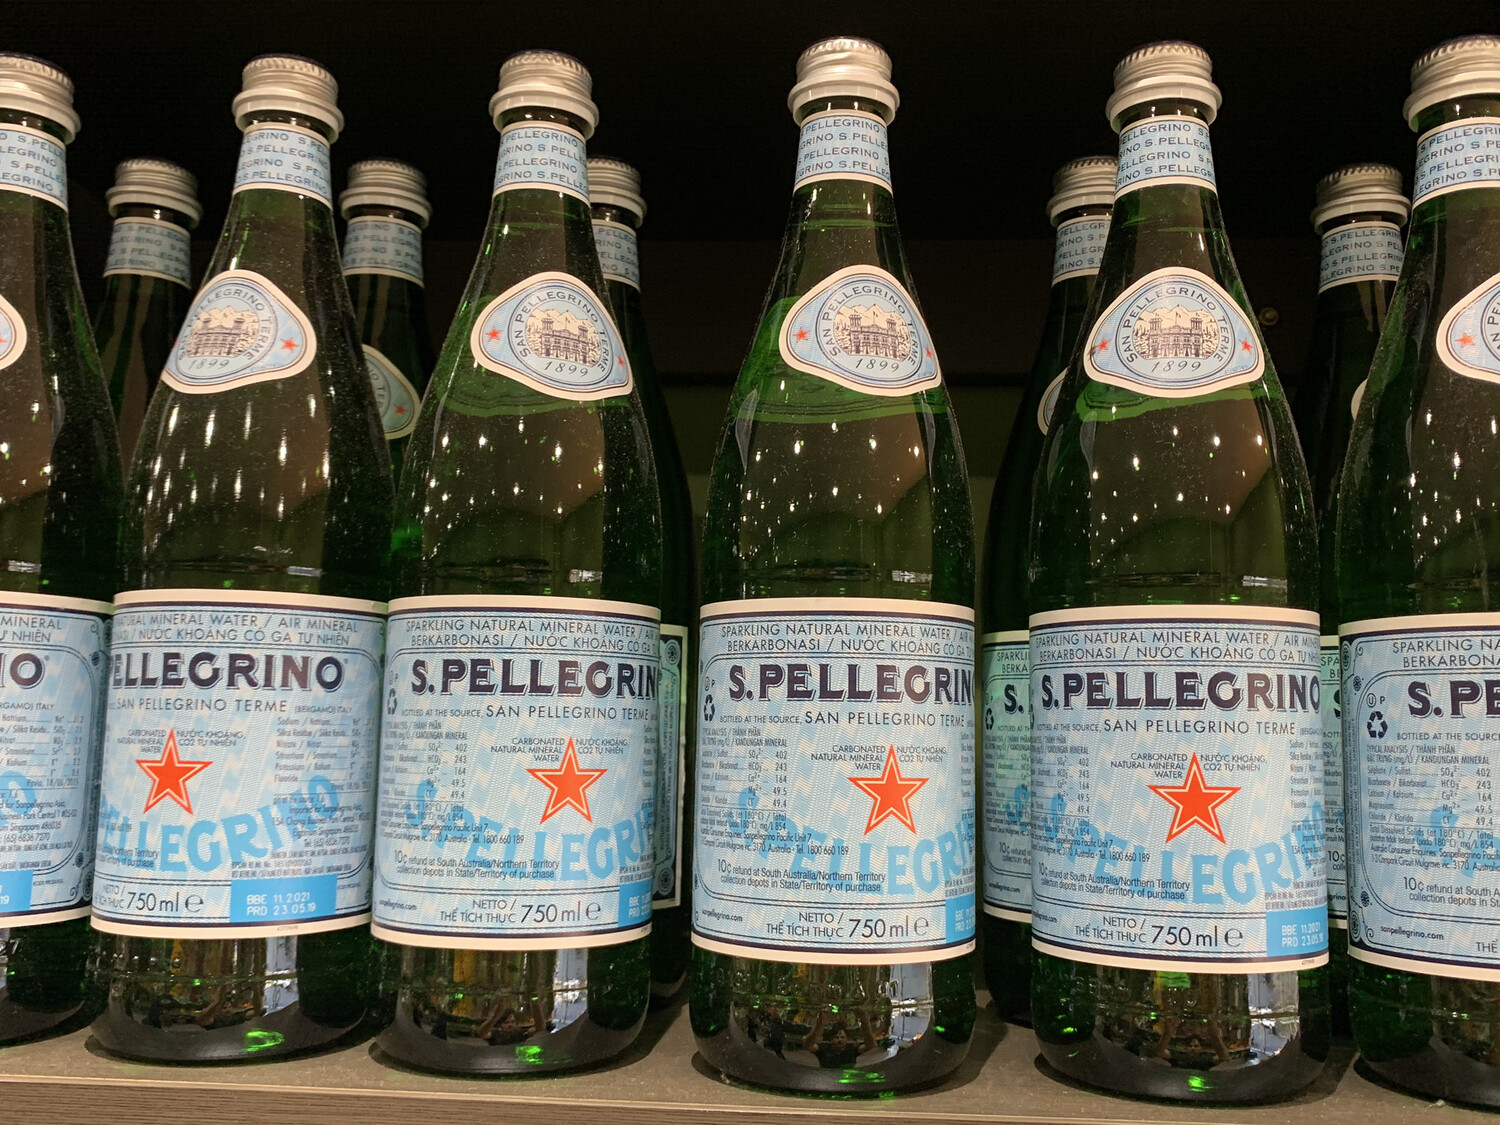 S.Pellegrino Sparkling Water 750ml